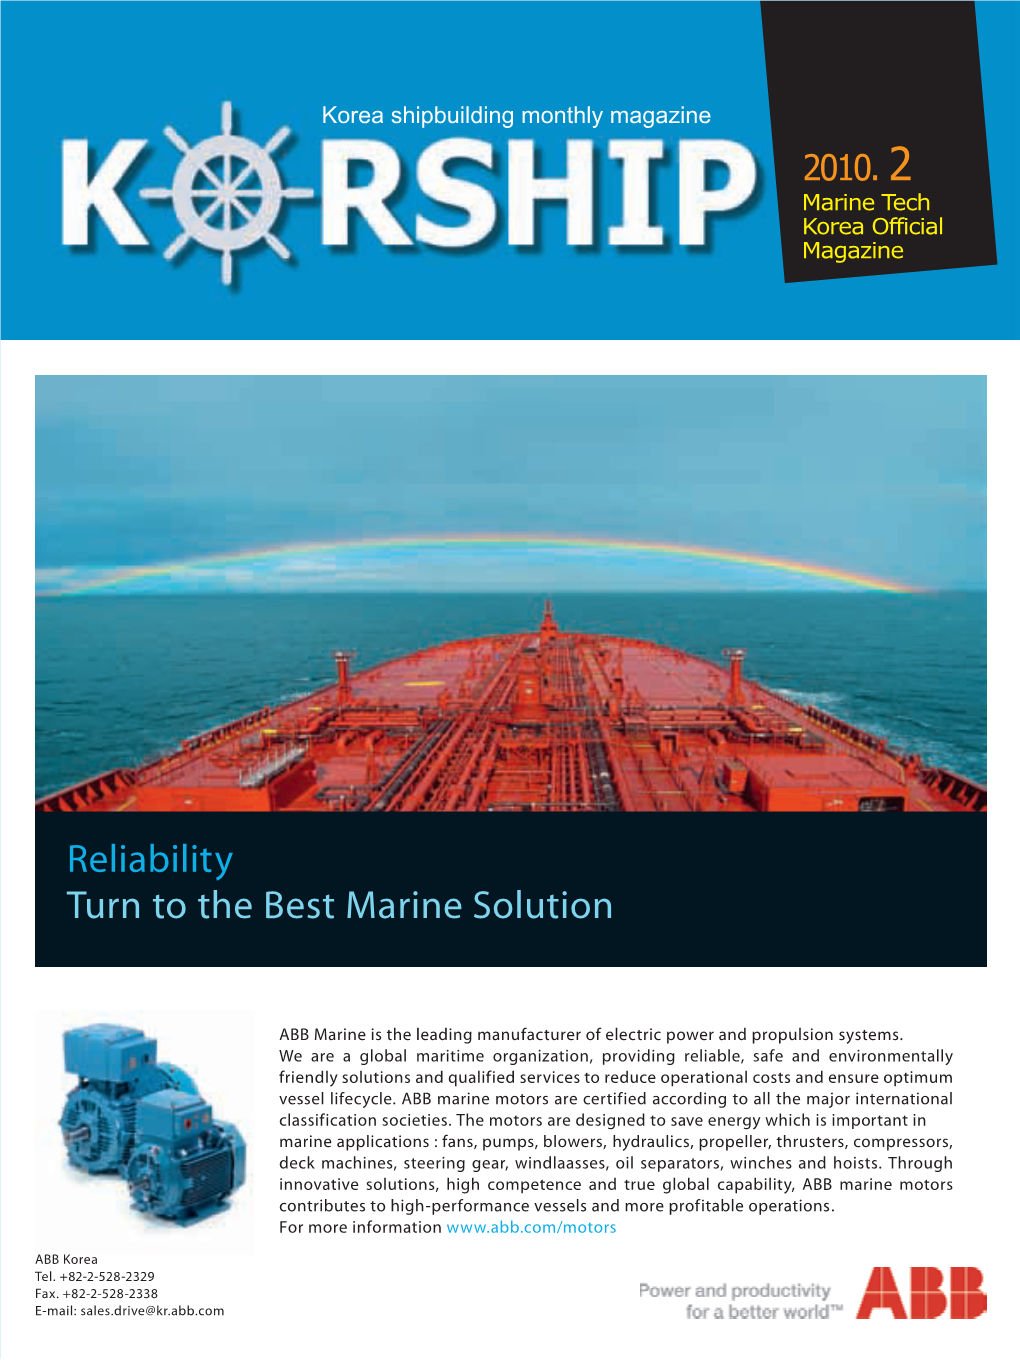 Korea Shipbuilding Monthly Magazine